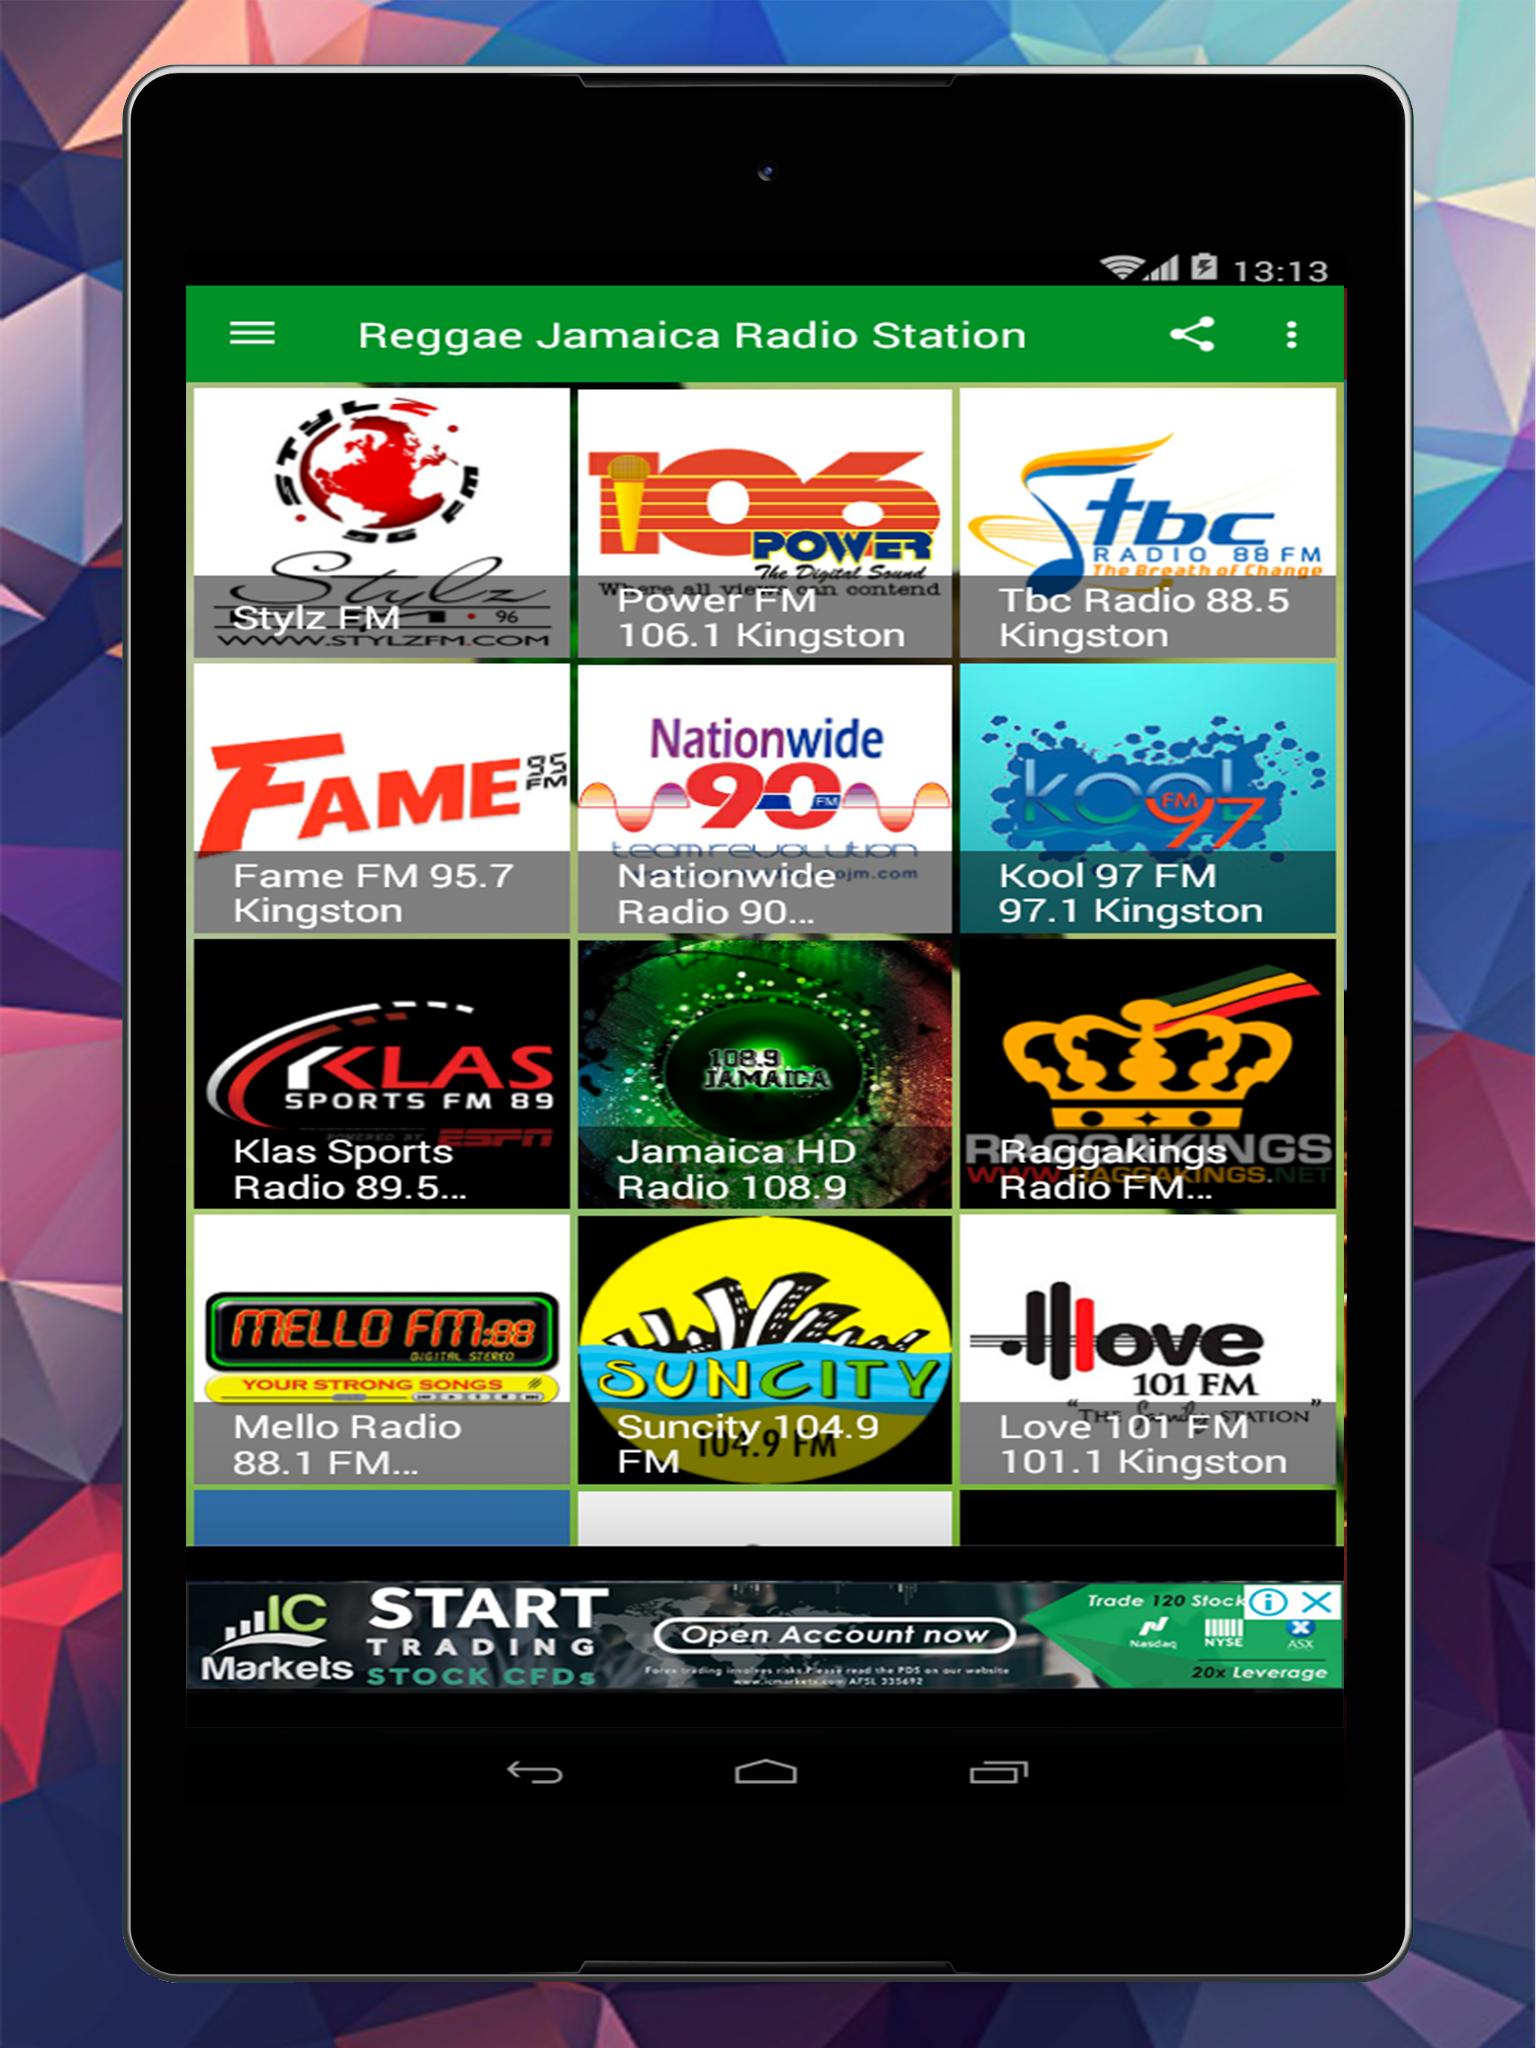 Reggae Jamaica Radio Station for Android - APK Download